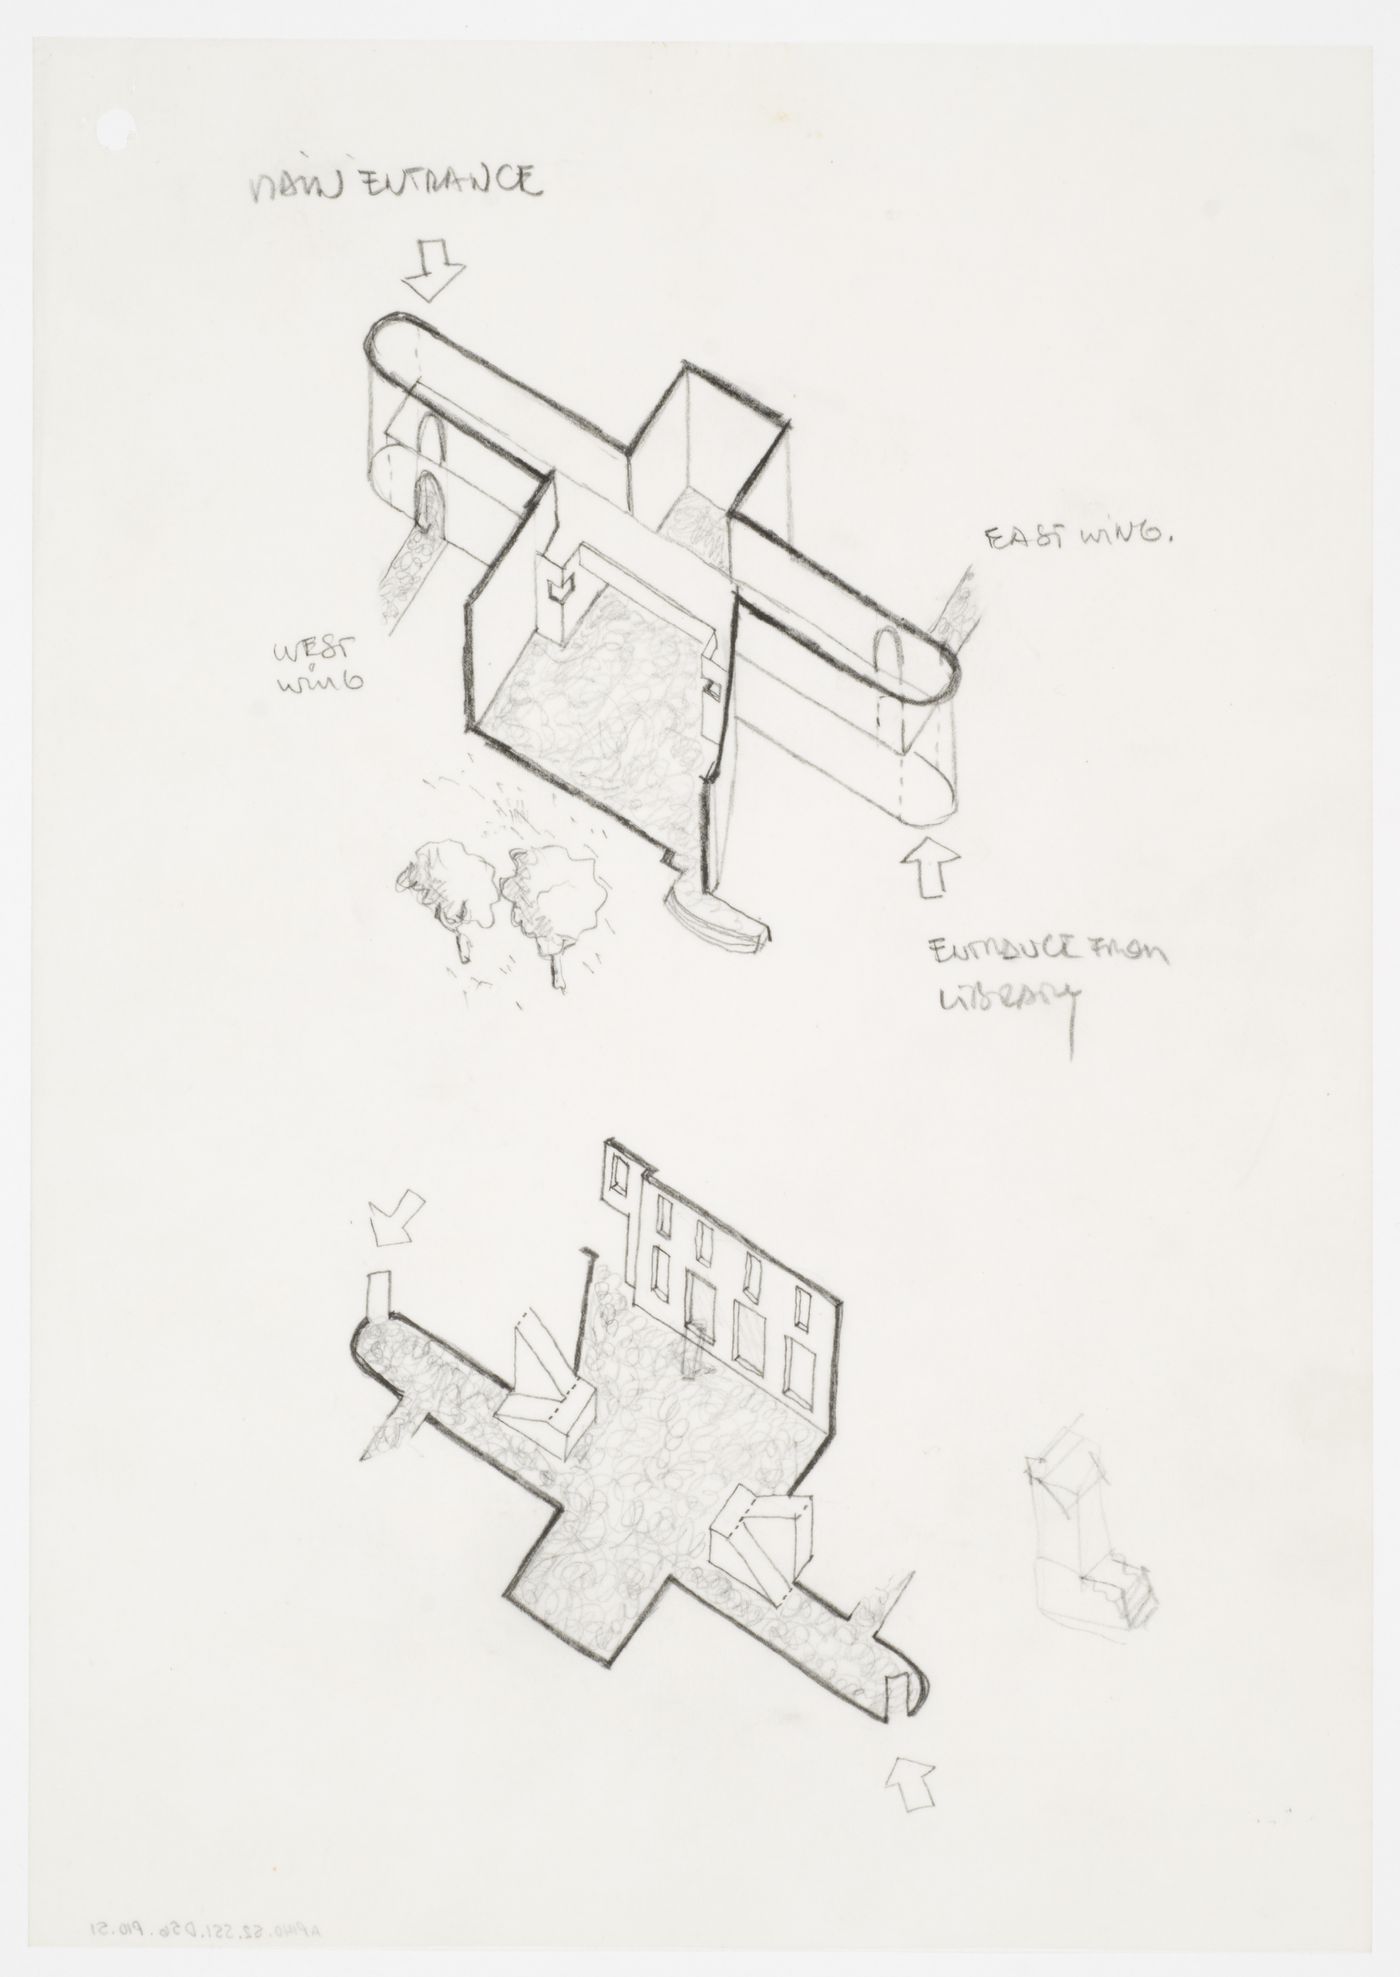 School of Architecture Addition, Rice University, Houston, Texas: axonometric sketches